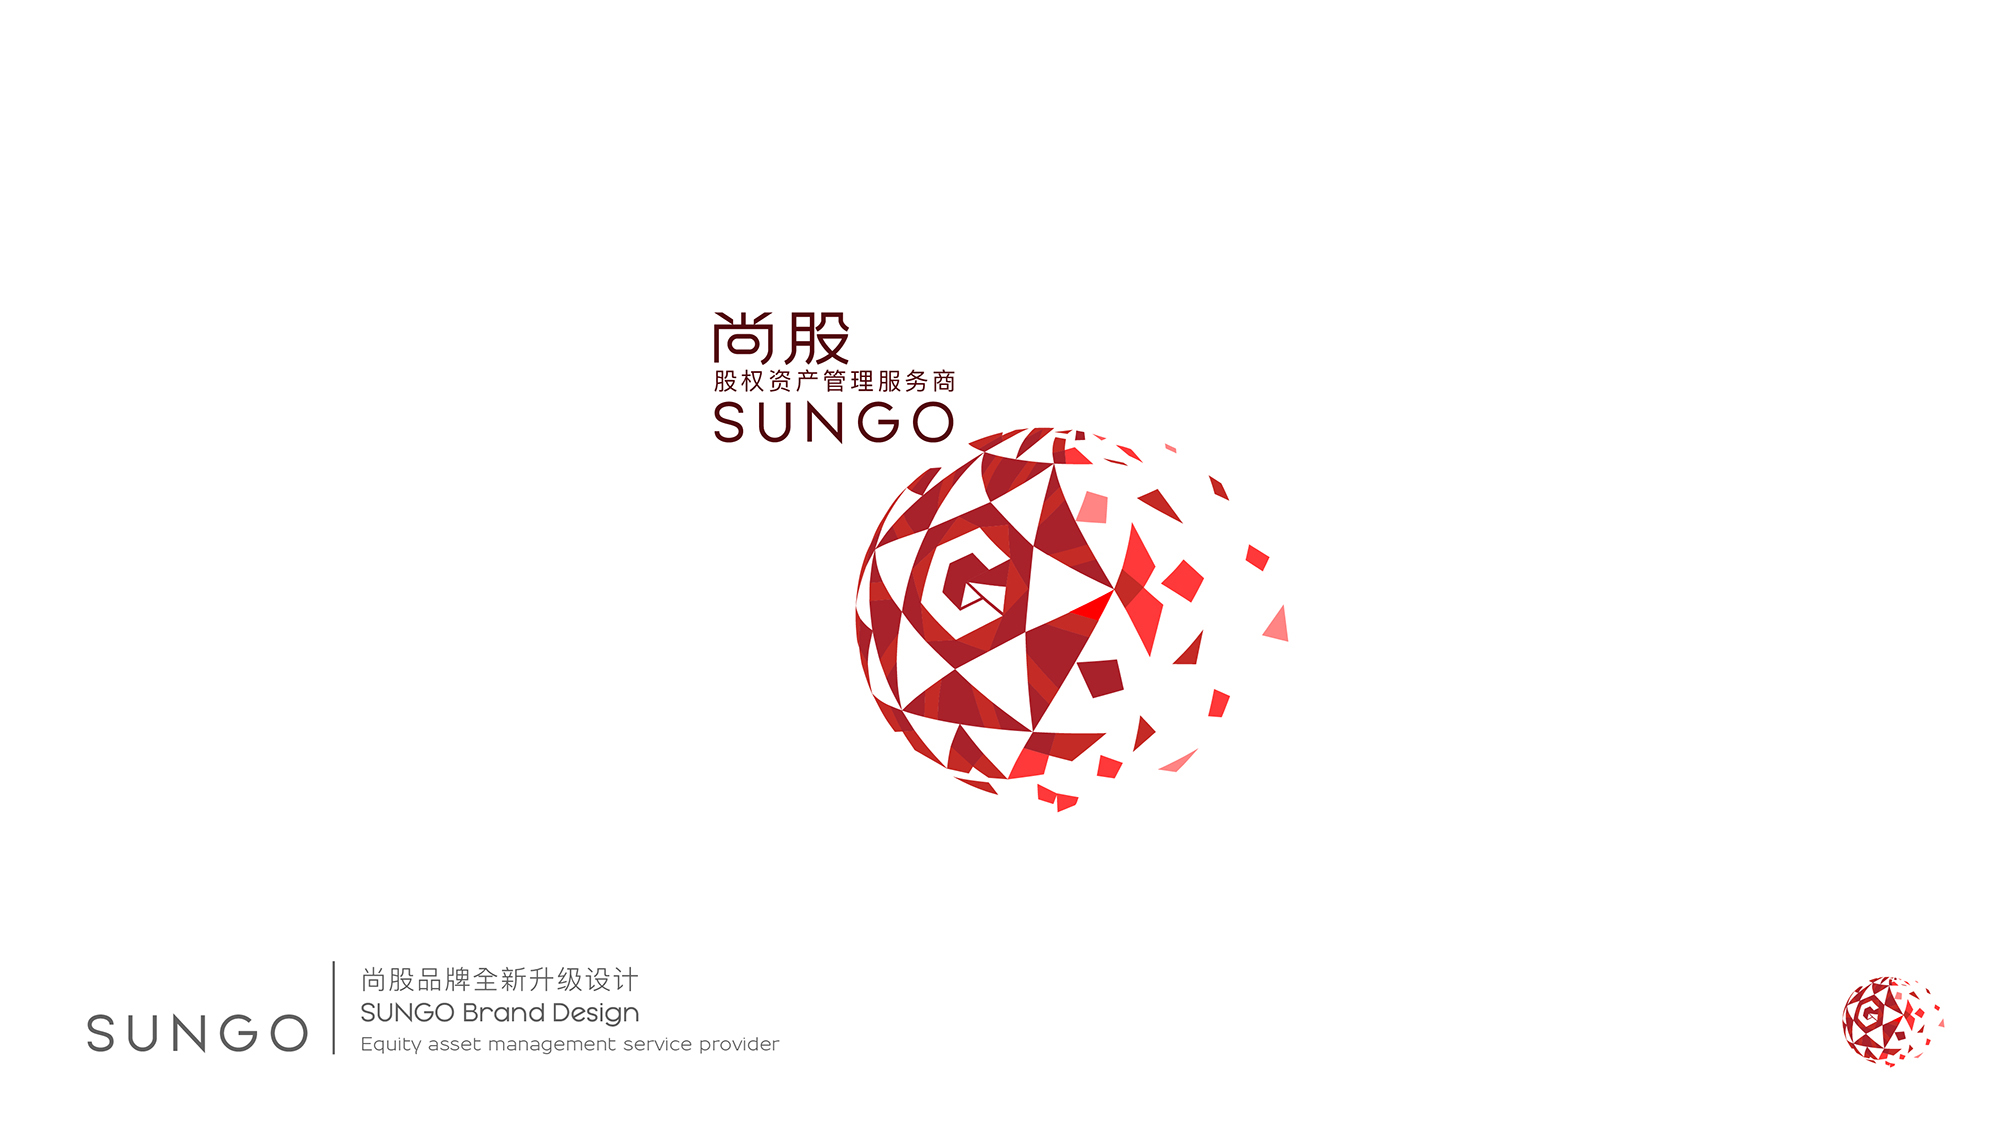 SUNGO-尚股Brand-Design-01.jpg